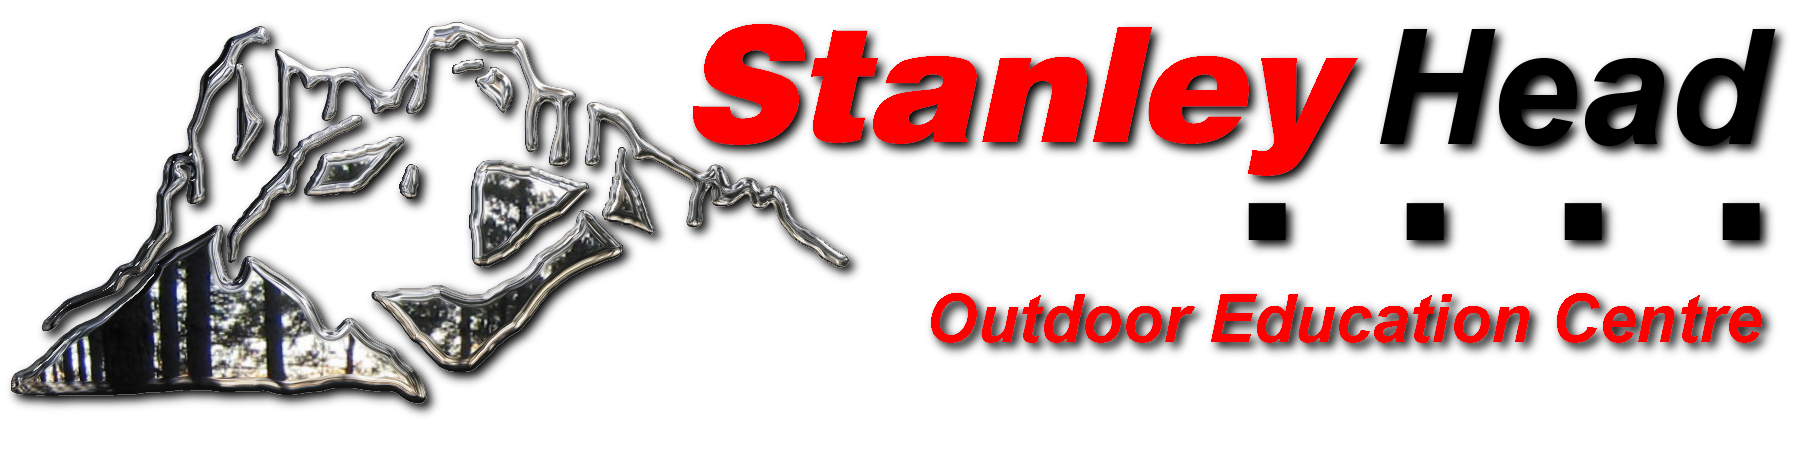 Stanley Head logo